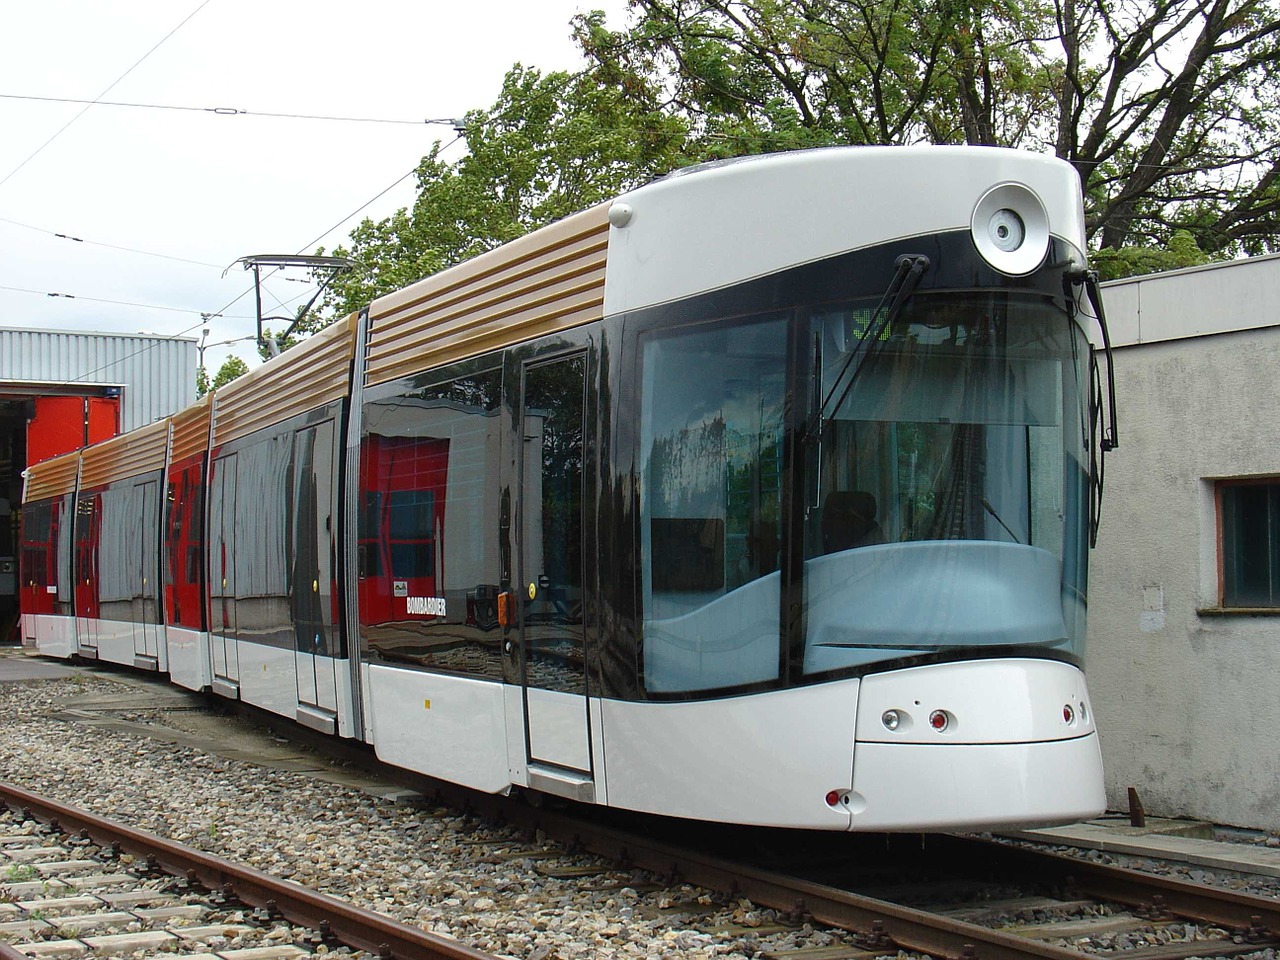 marseille tram train free photo